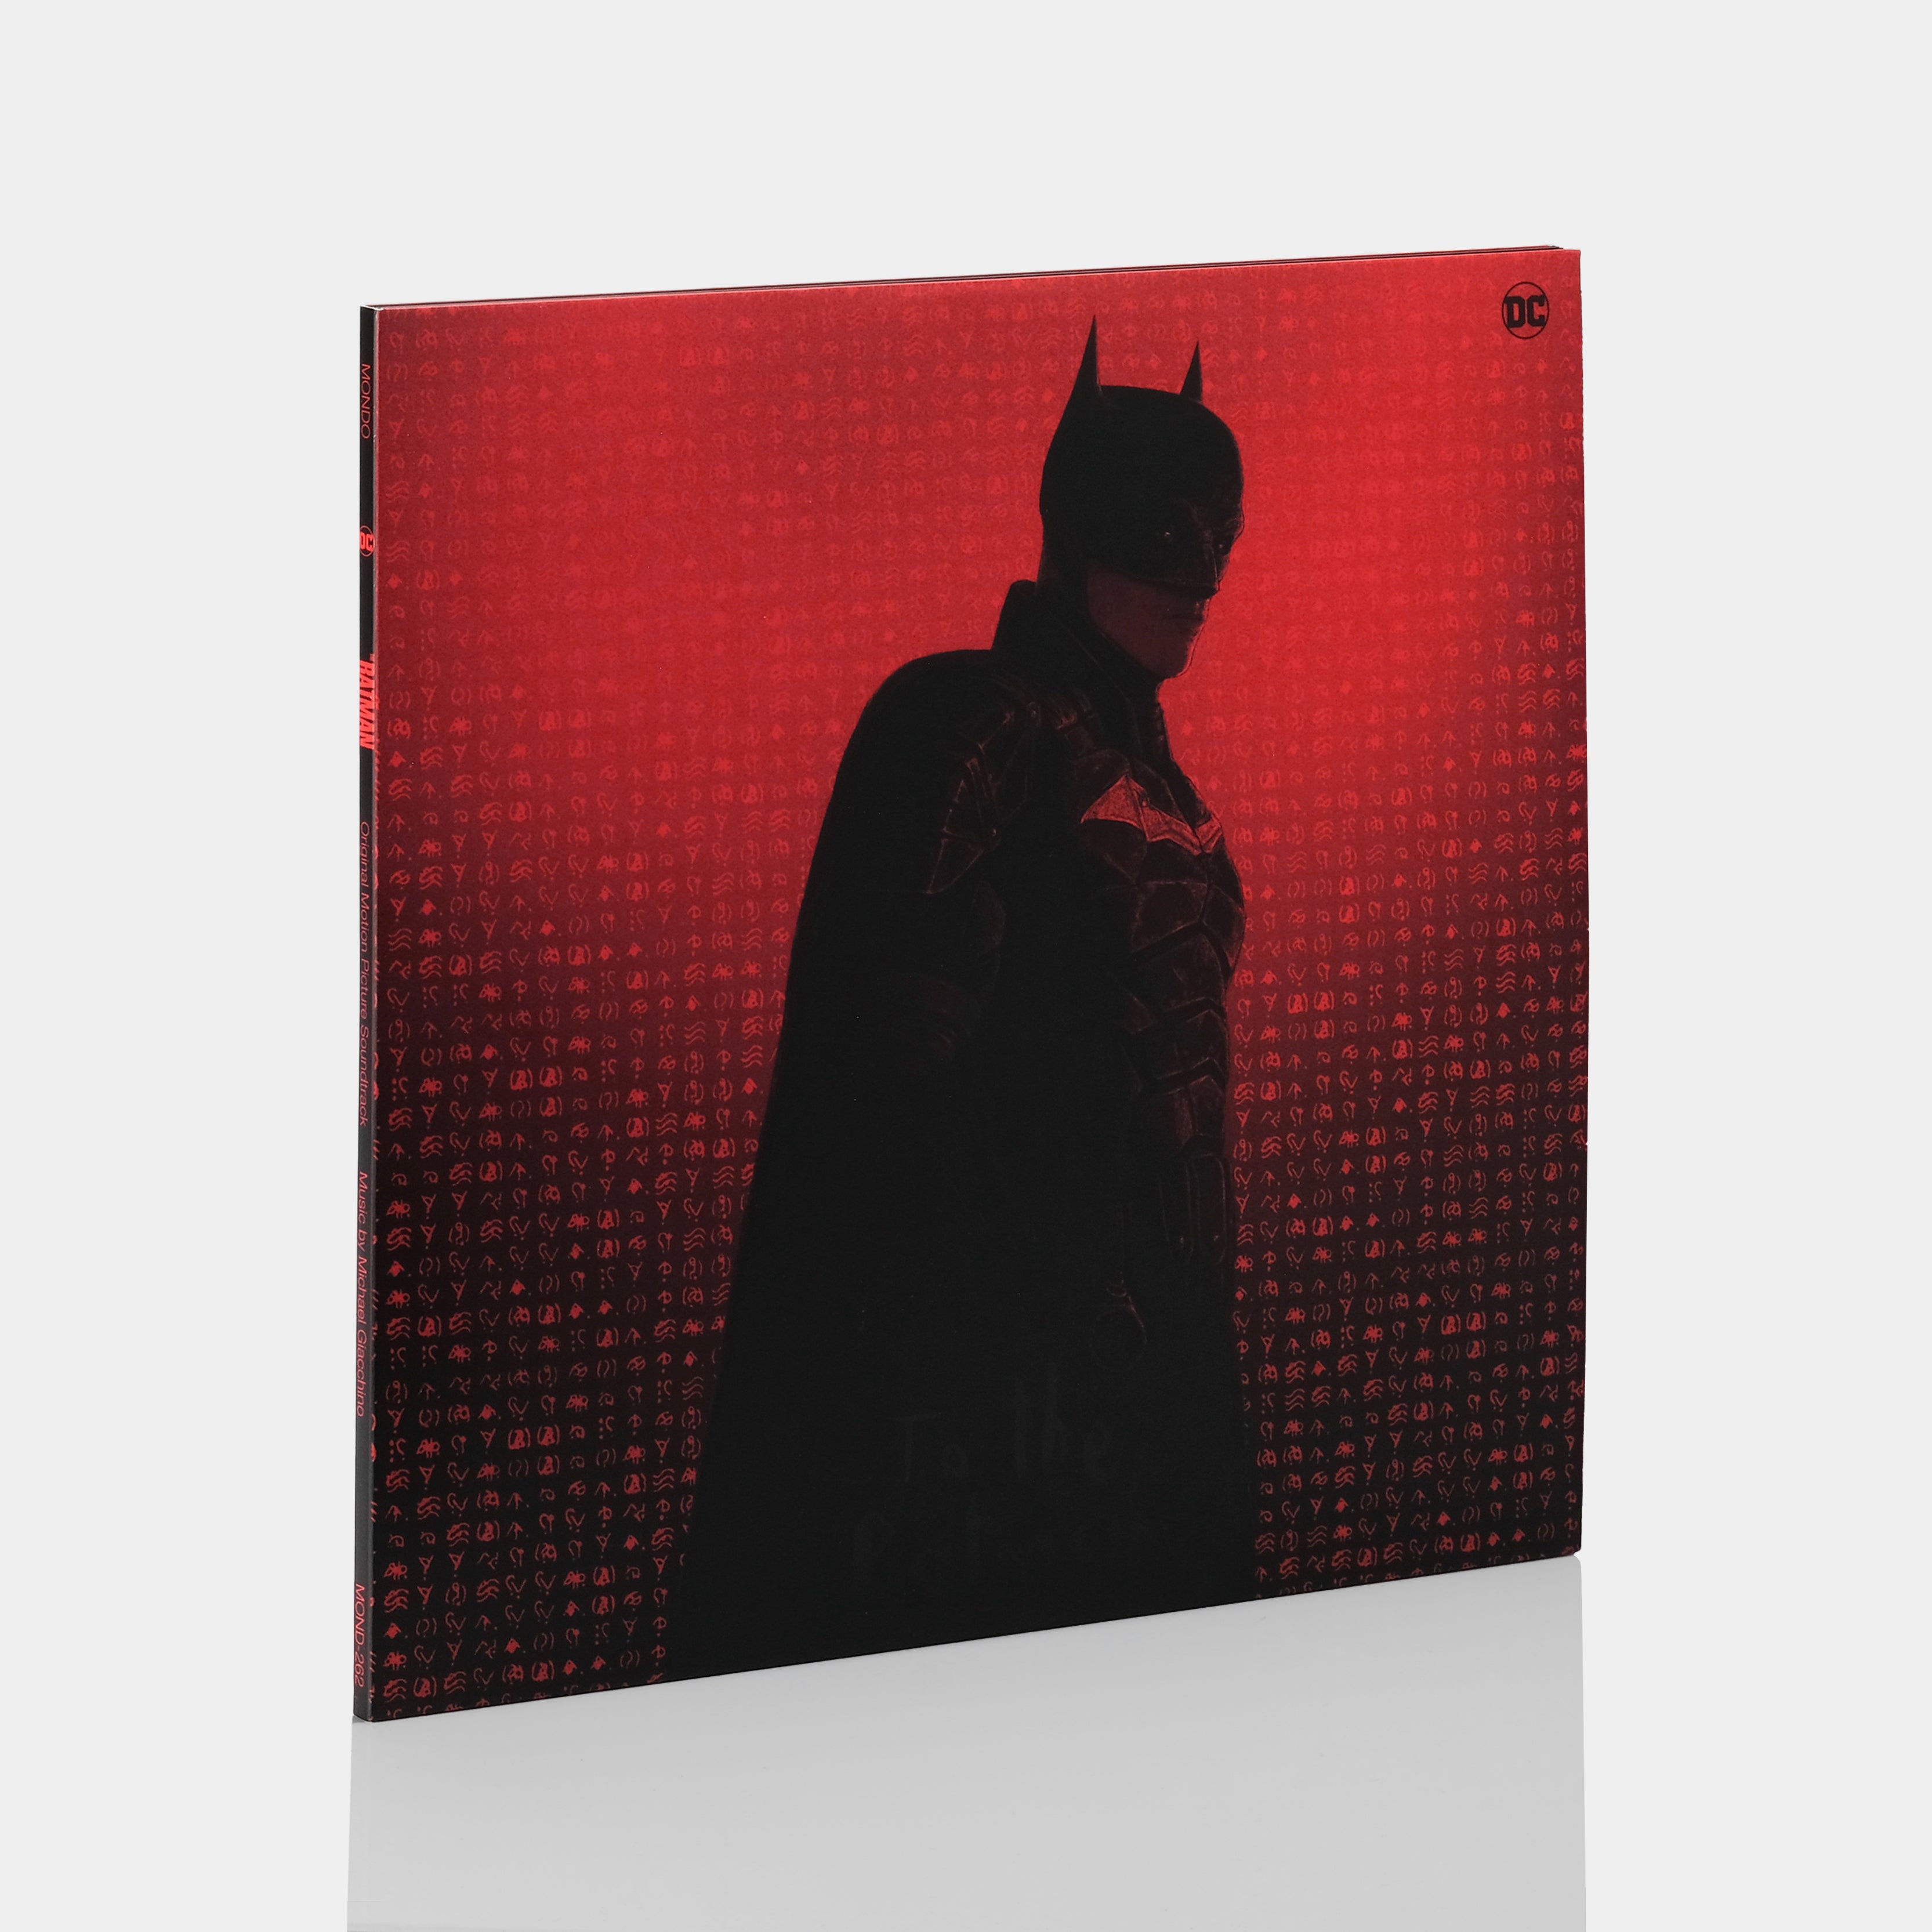 The Batman (Original Motion Picture Soundtrack) 3xLP Red, Black and Green Vinyl Record